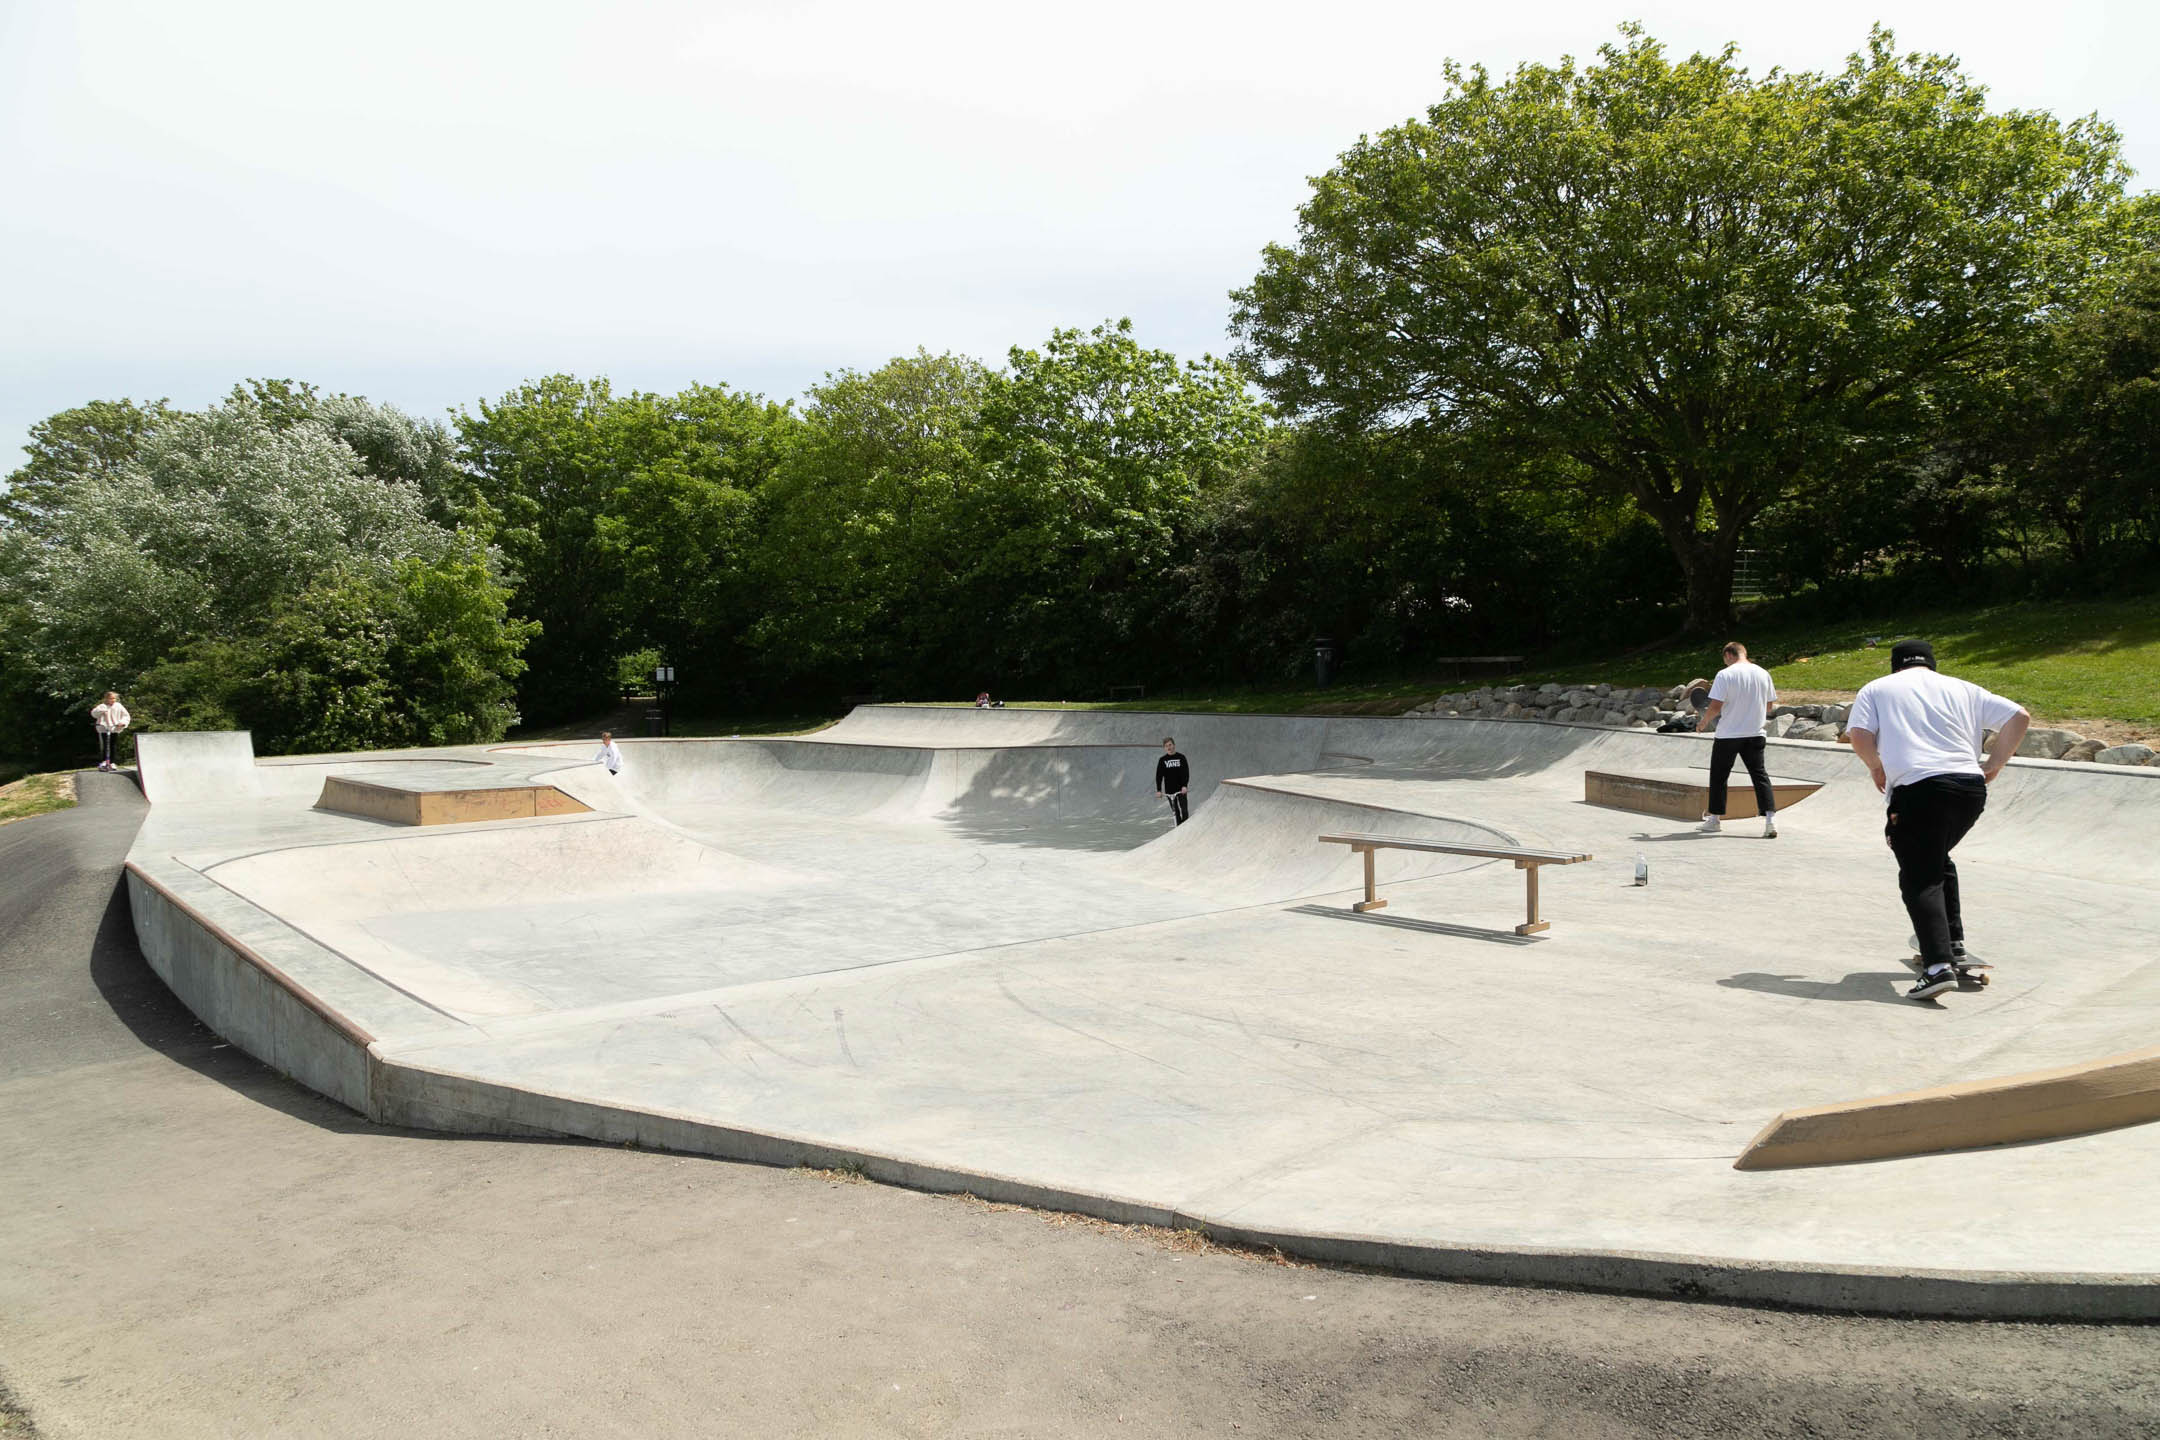 newhaven skatepark review tips skateboarding in east sussex u k